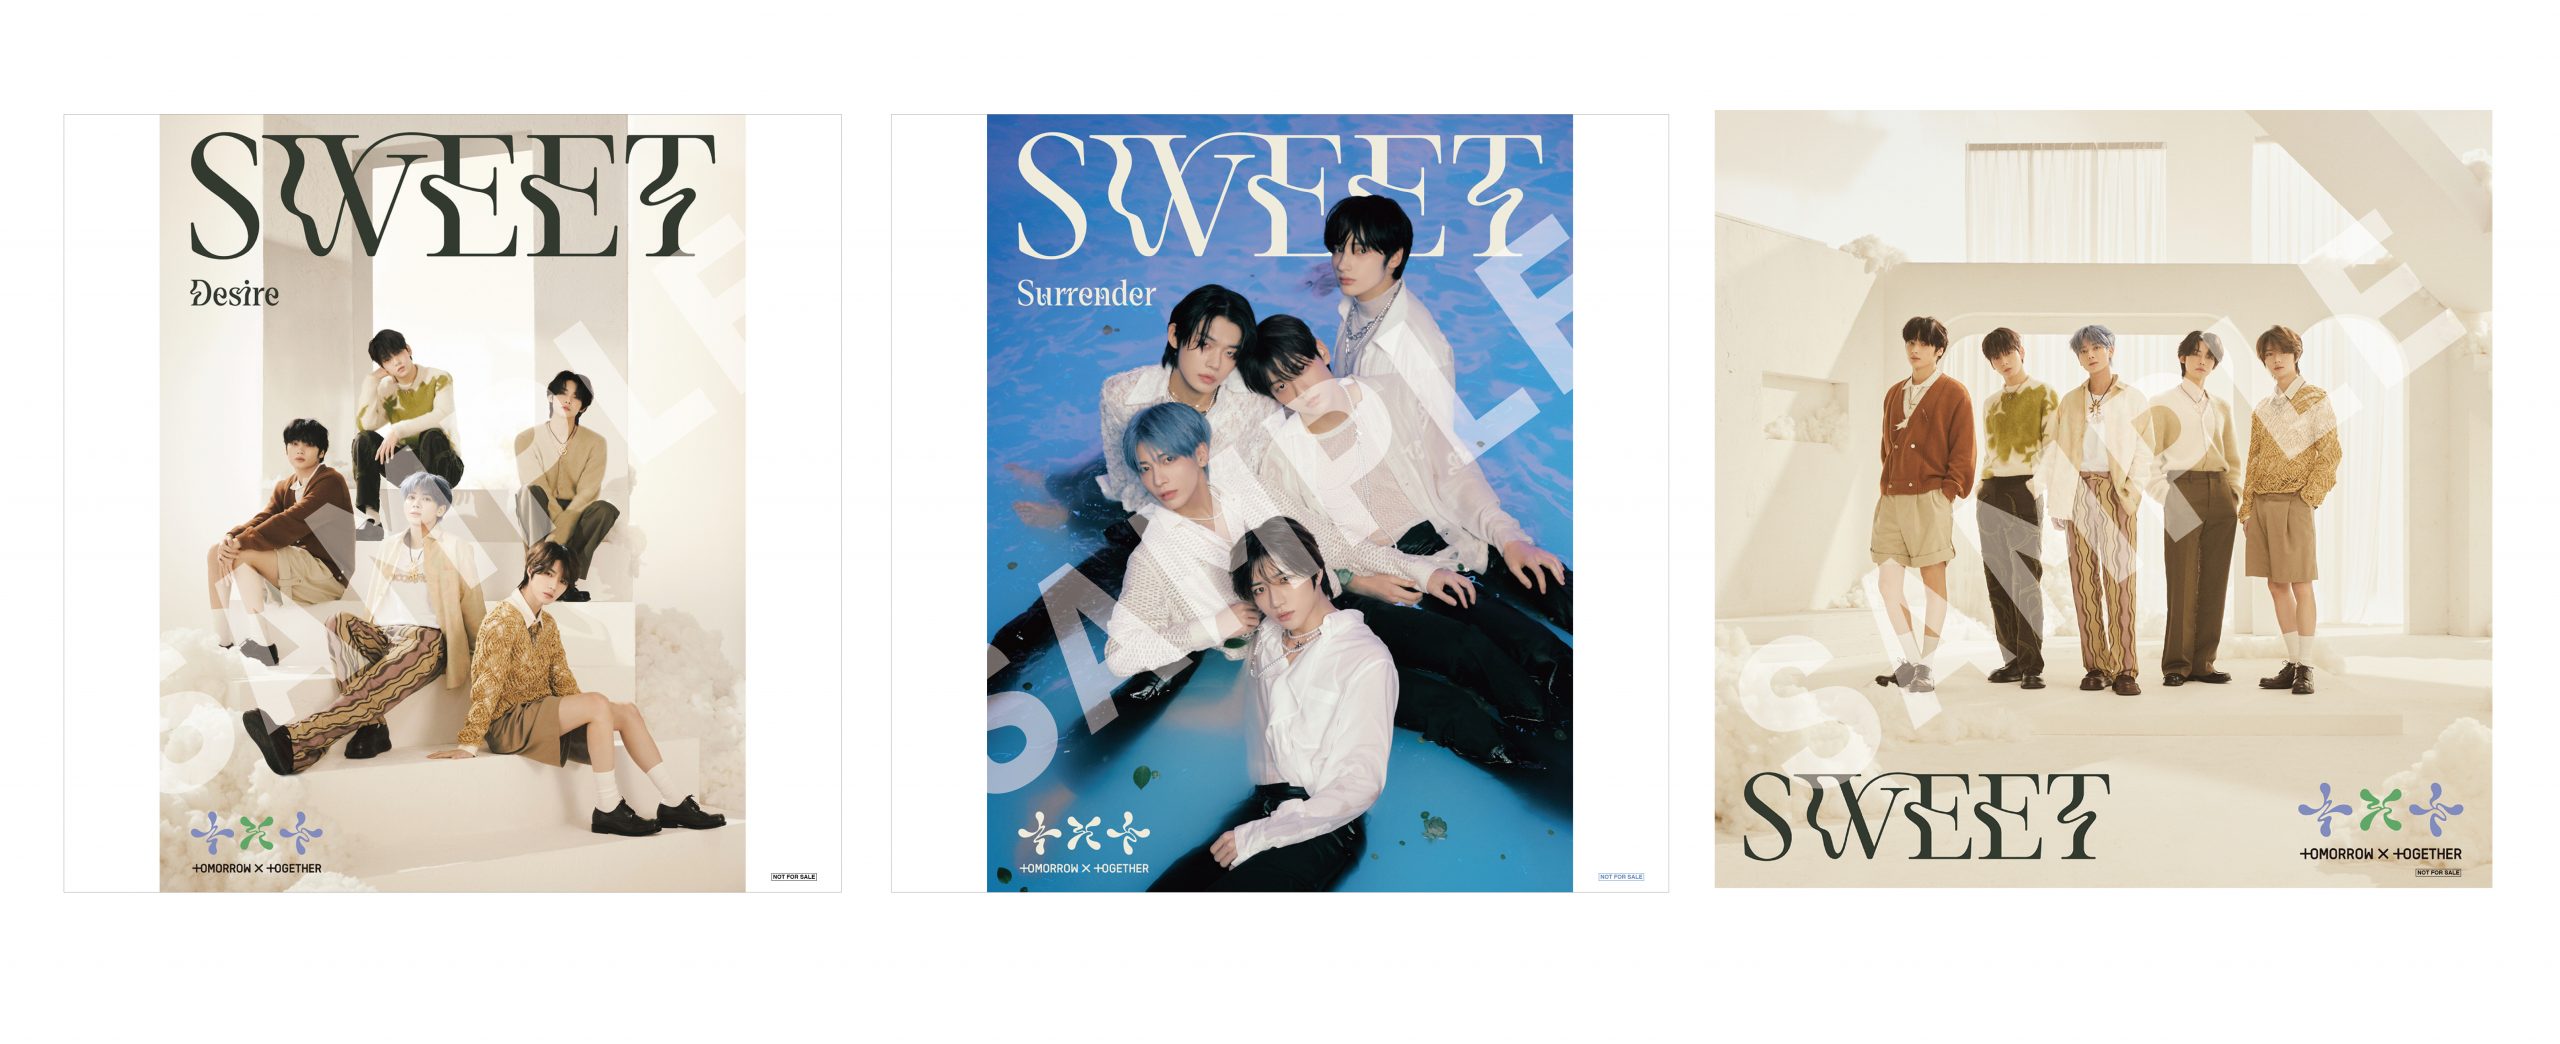 TOMORROW X TOGETHER日本2ndアルバム『SWEET』CD購入特典絵柄公開 